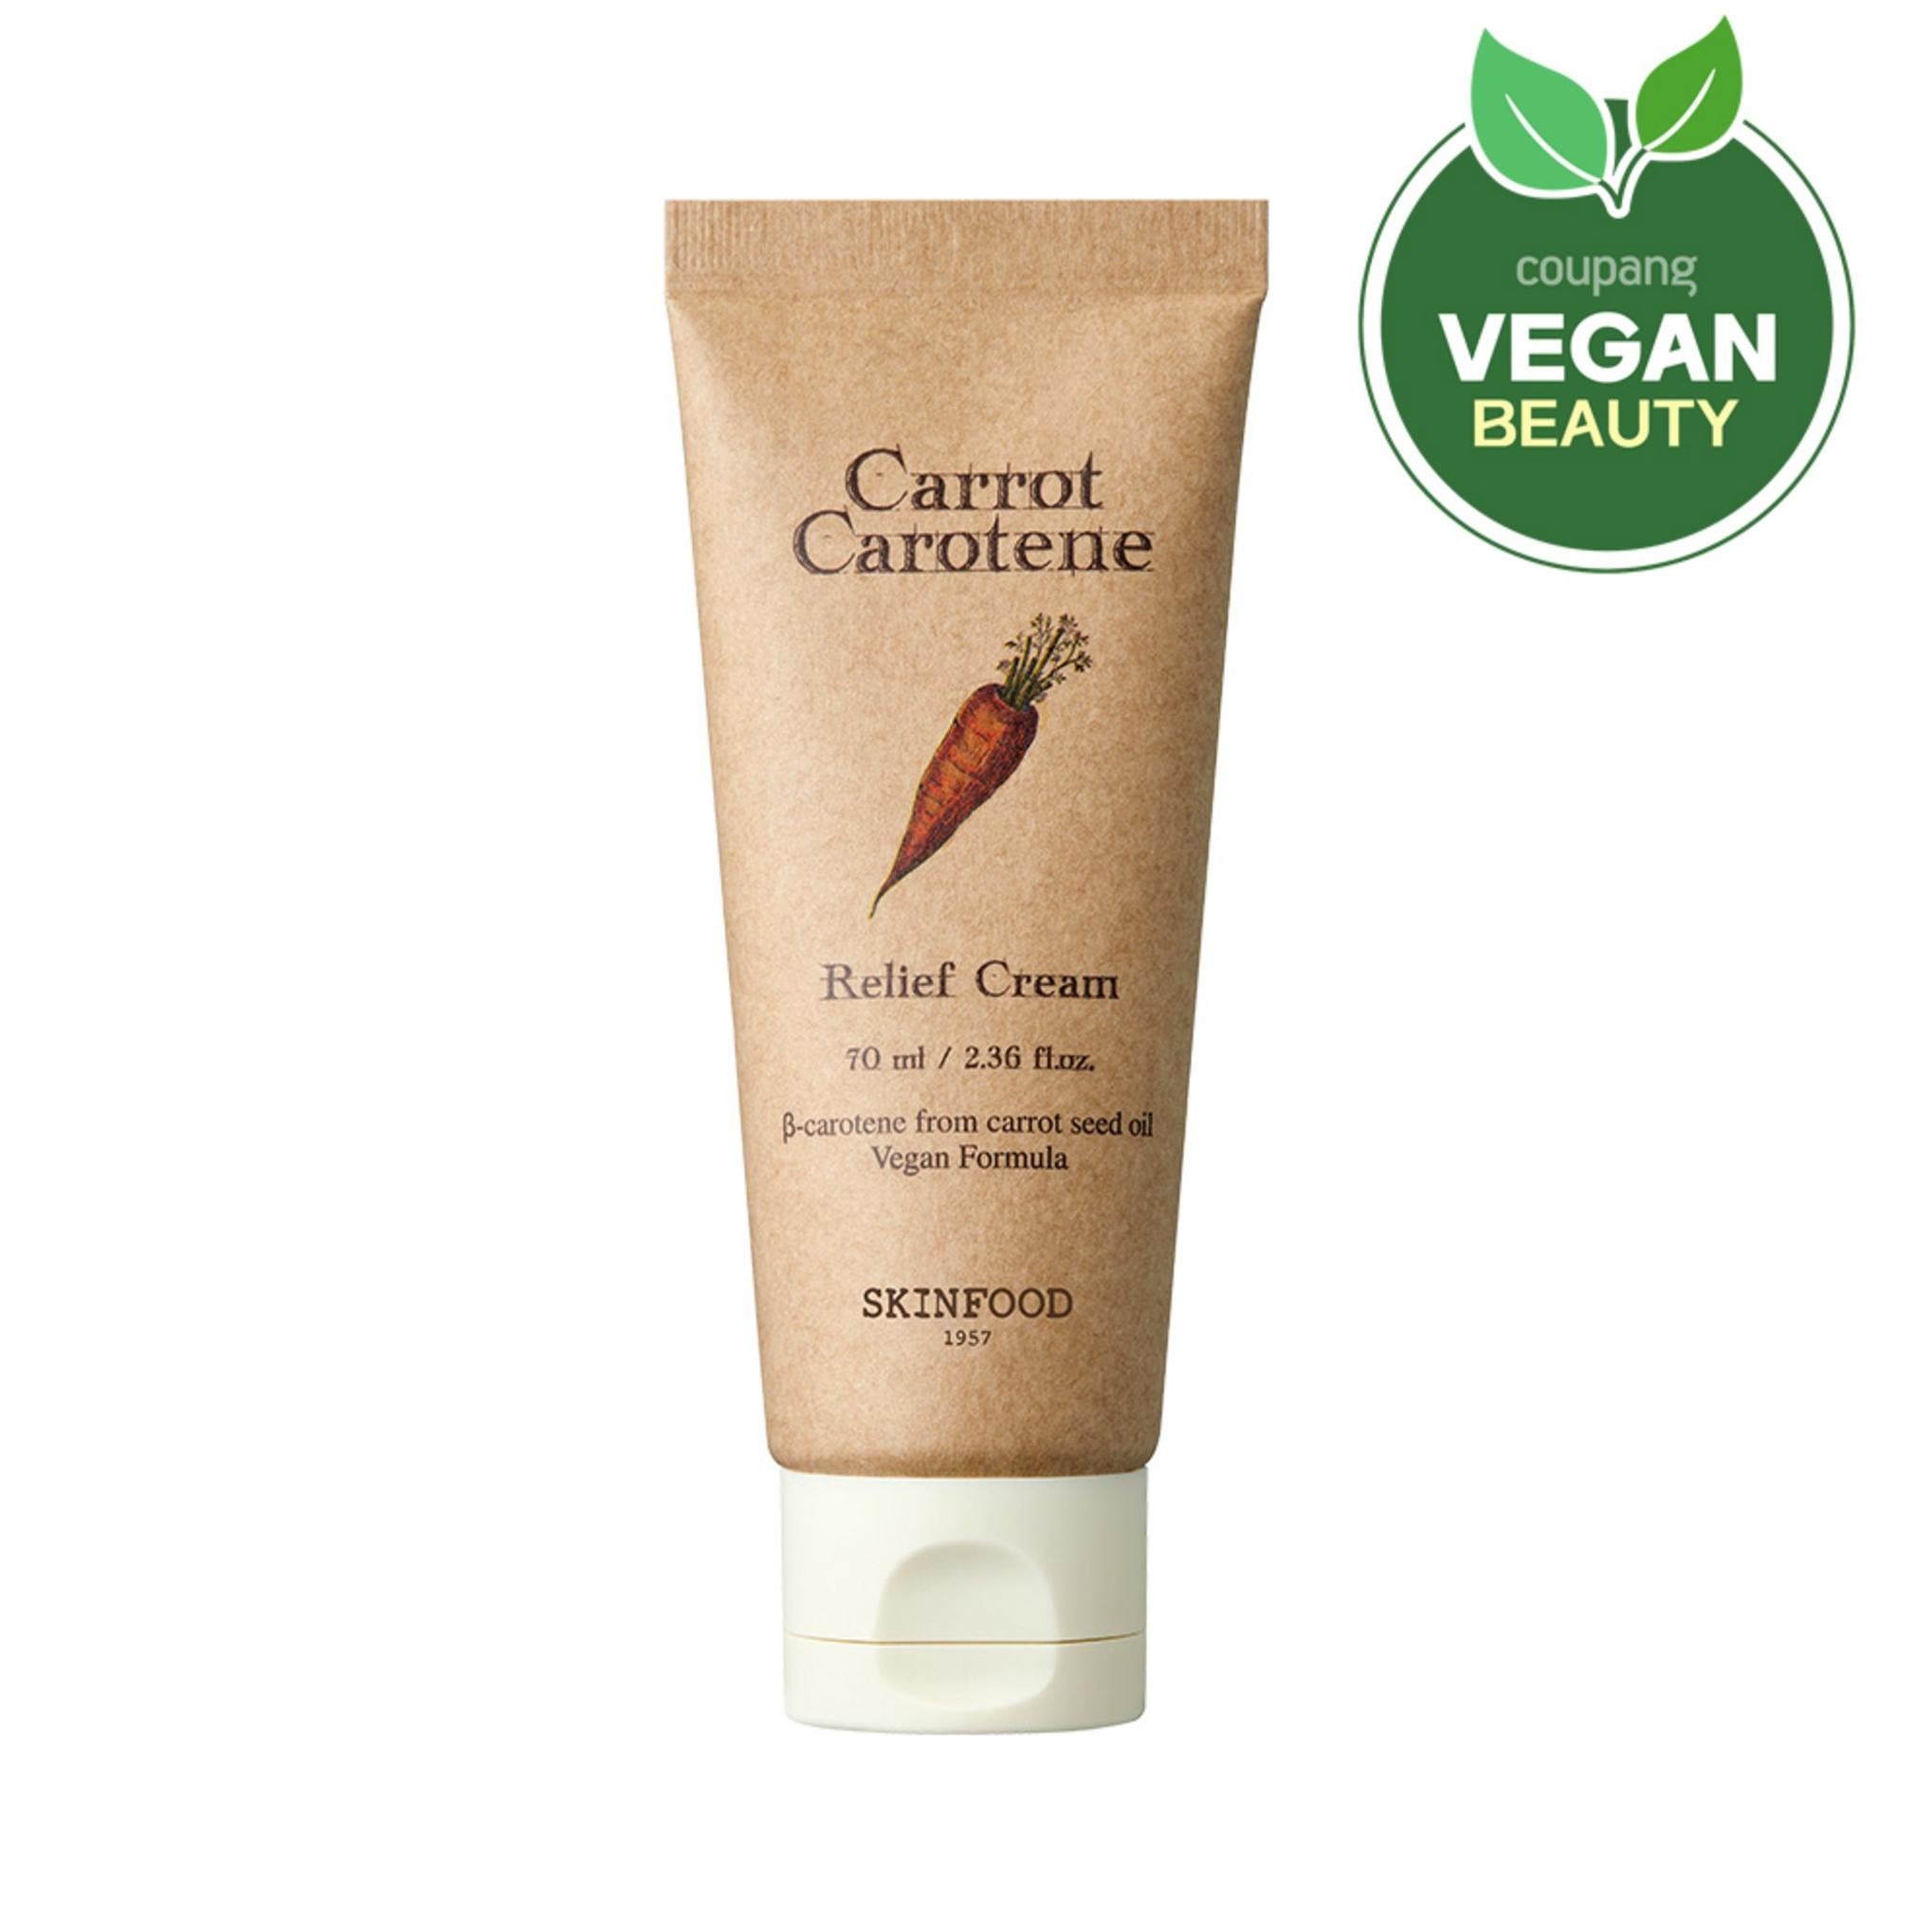 SKINFOOD Carrot Carotene Relief Cream